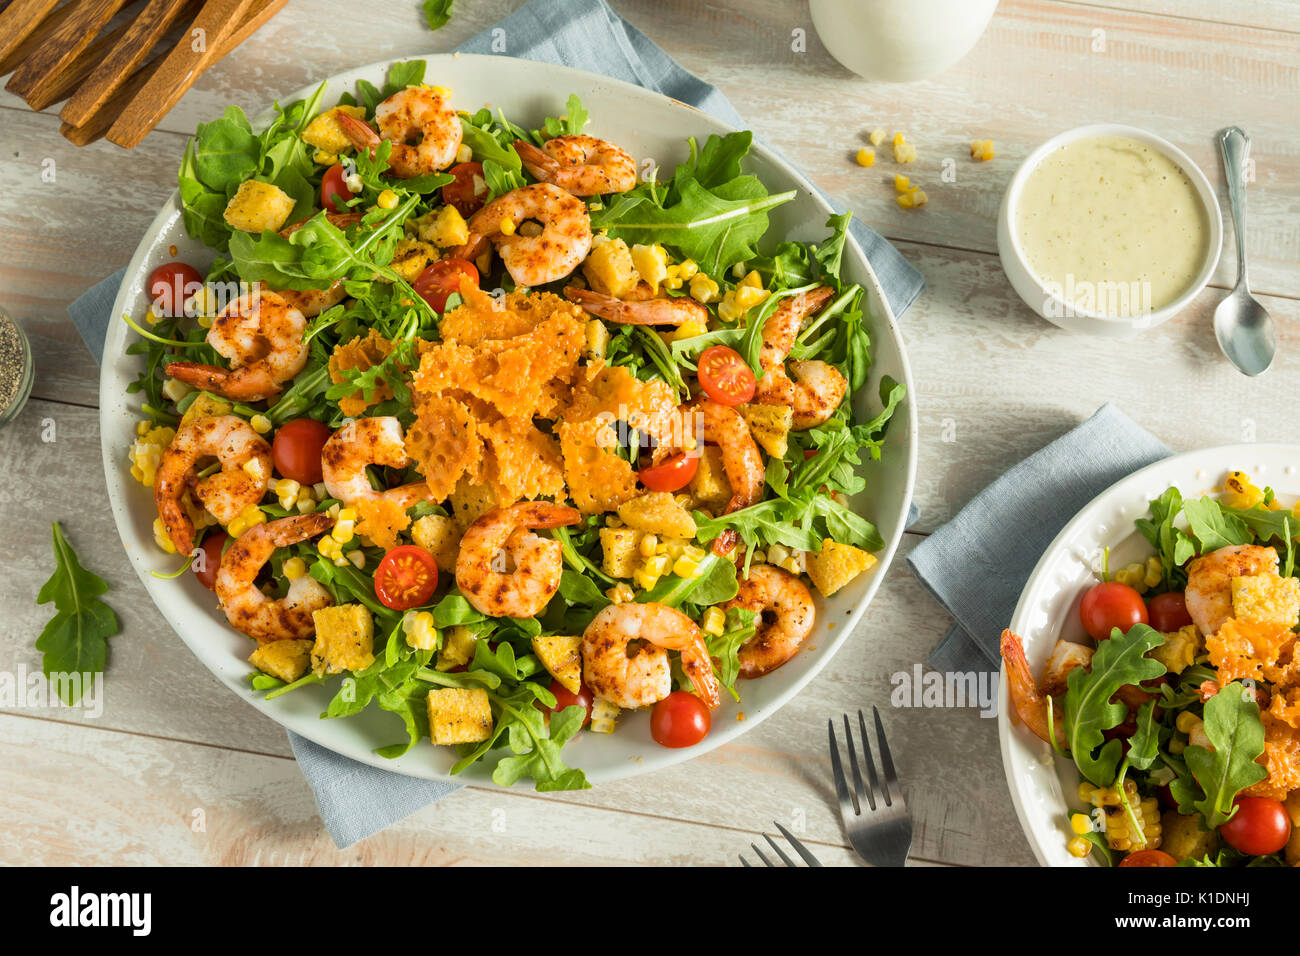 Homemade Arugula Shrimp and Polenta Salad wit Herby Dressing Stock Photo